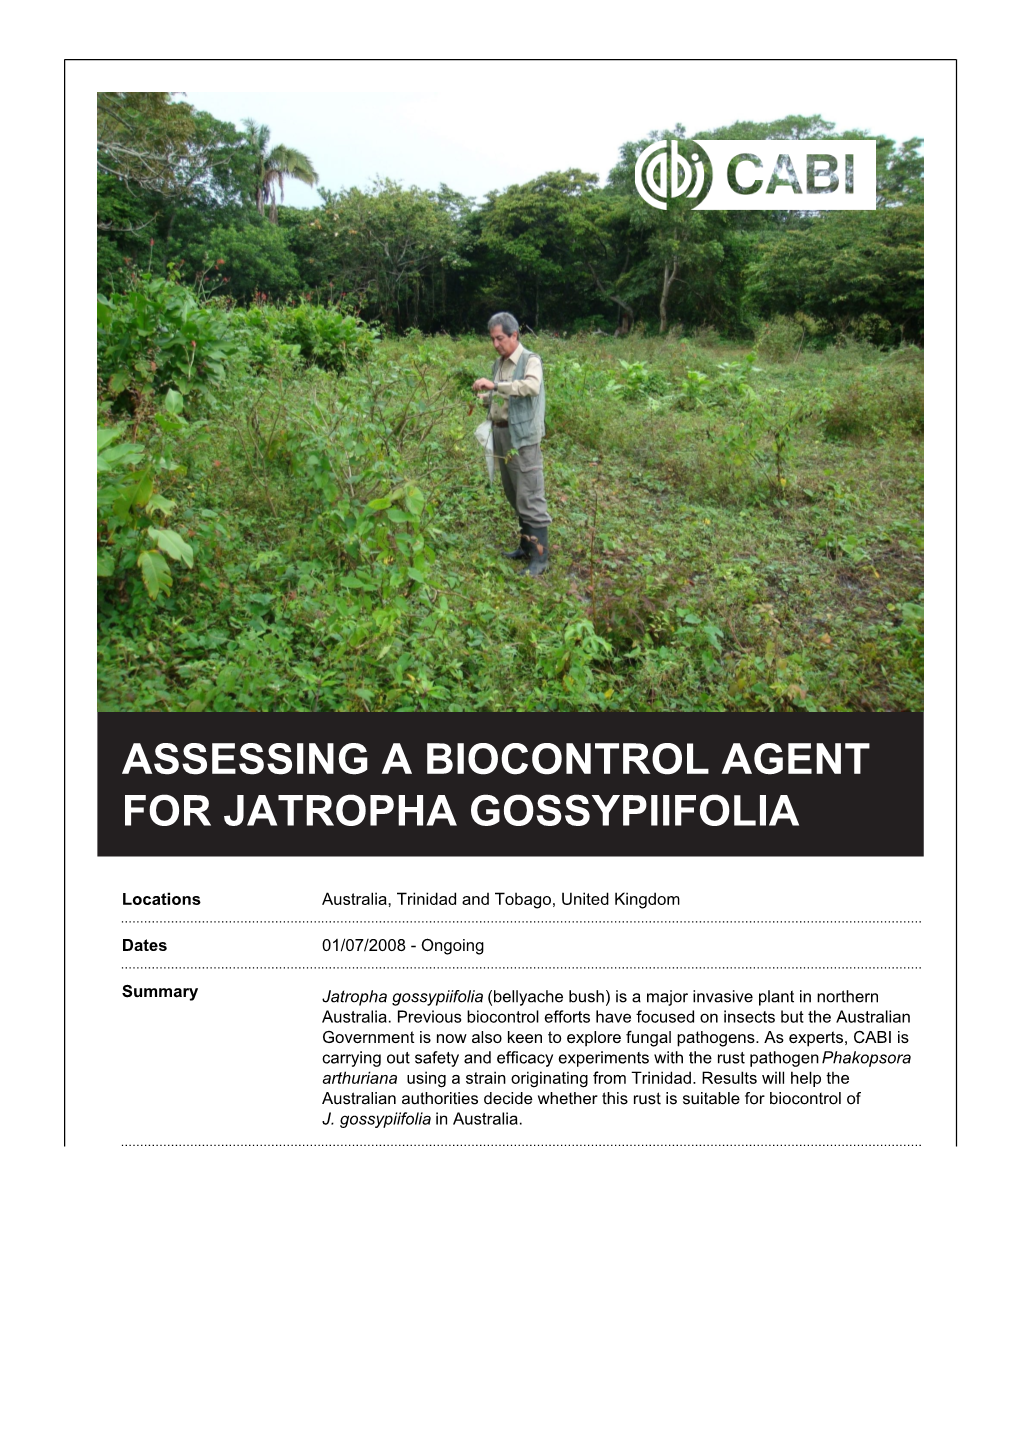 Assessing a Biocontrol Agent for Jatropha Gossypiifolia